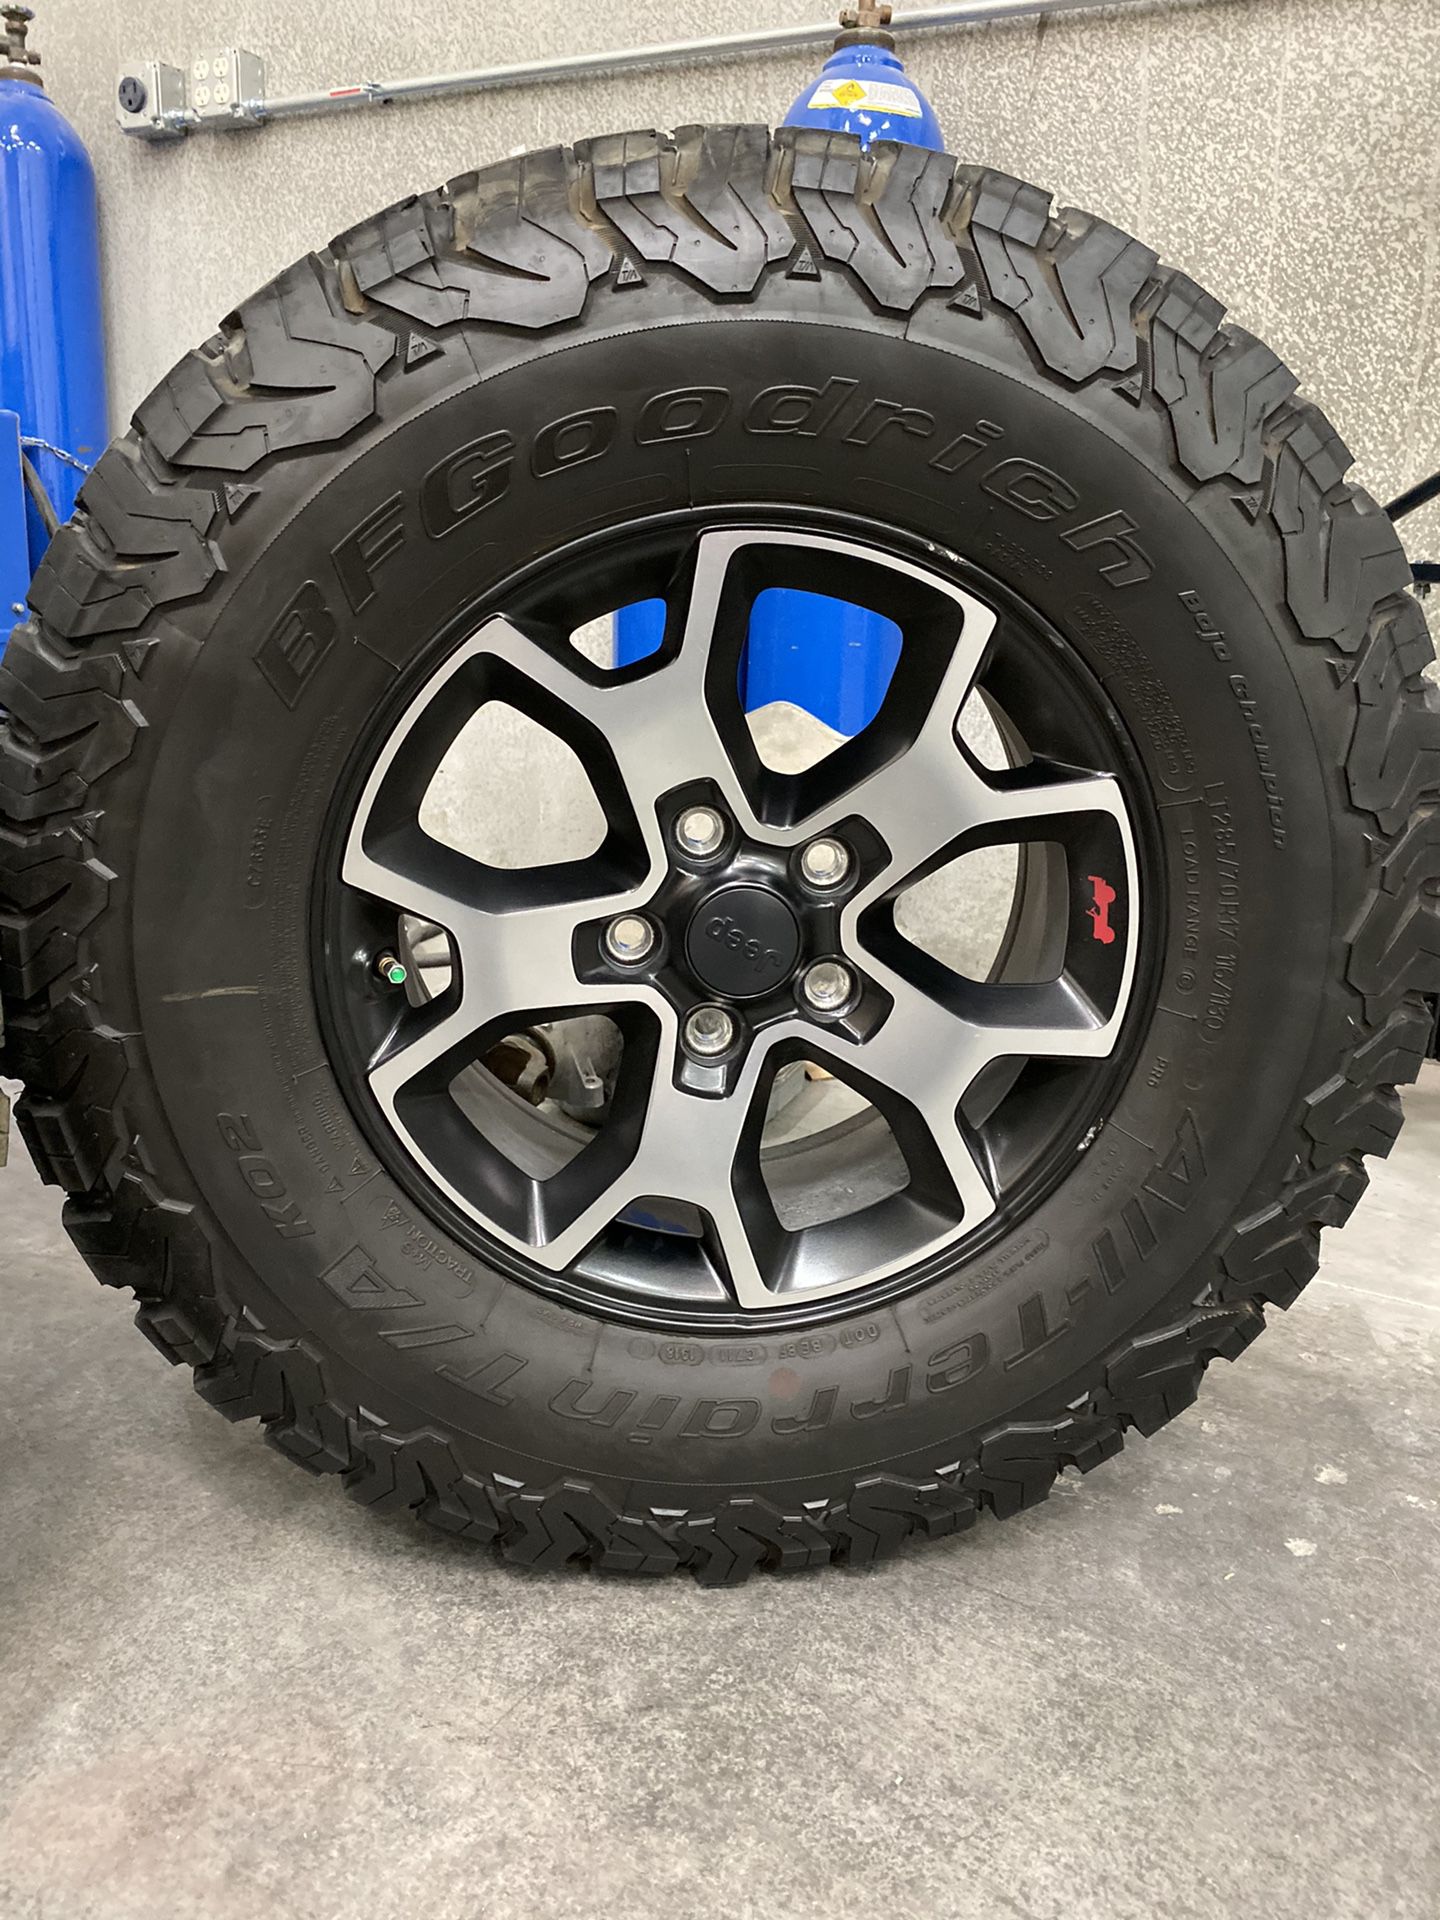 2018 Jeep JL Rubicon Stock Wheels & Tires